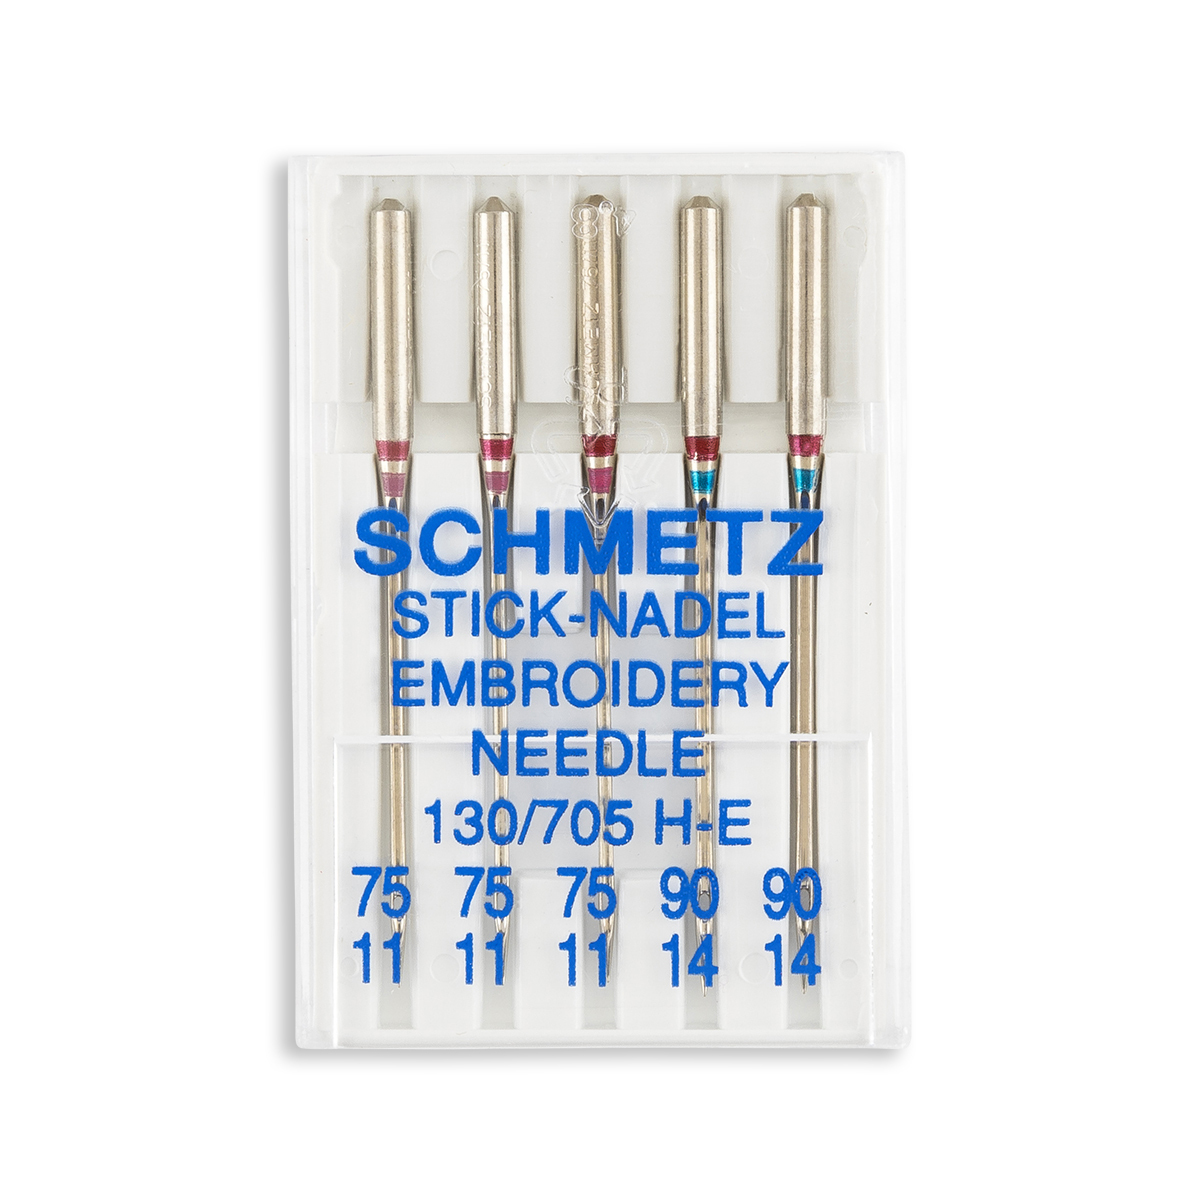 Schmetz Quilting Needles – Assorted (75/11, 90/14)